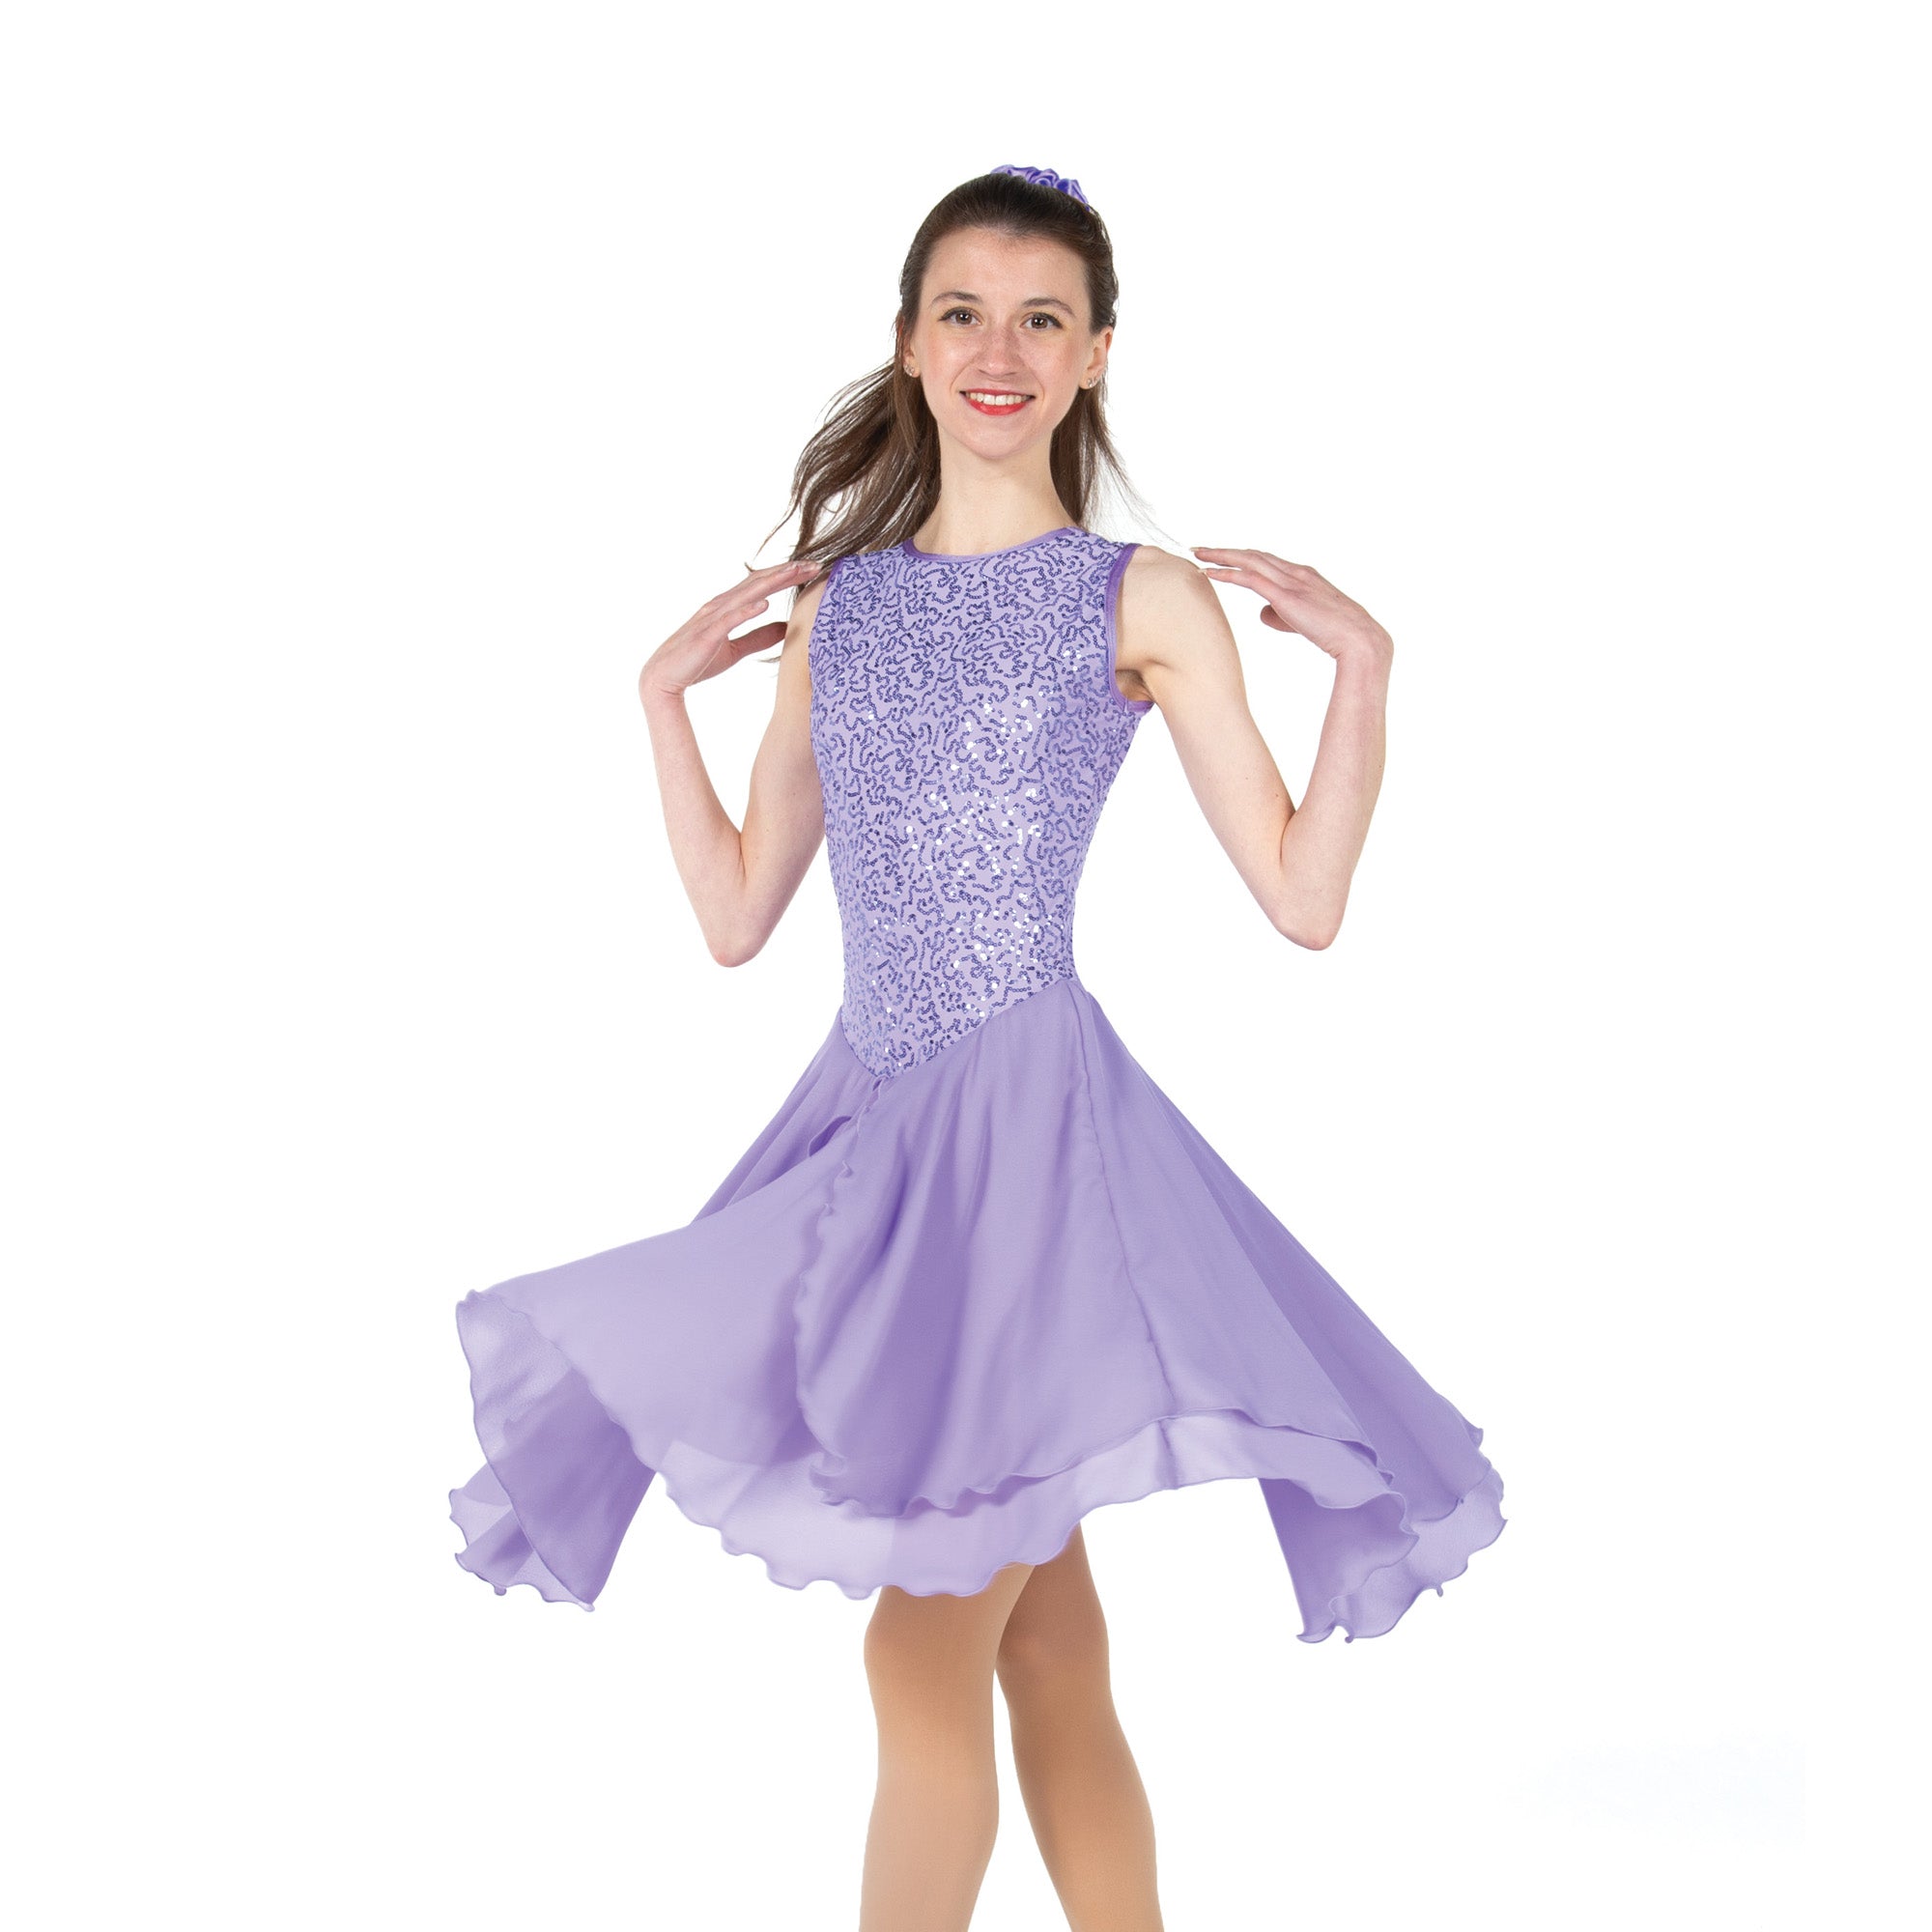 111 Dancerella Dance Dress in Iris Purple by Jerry's